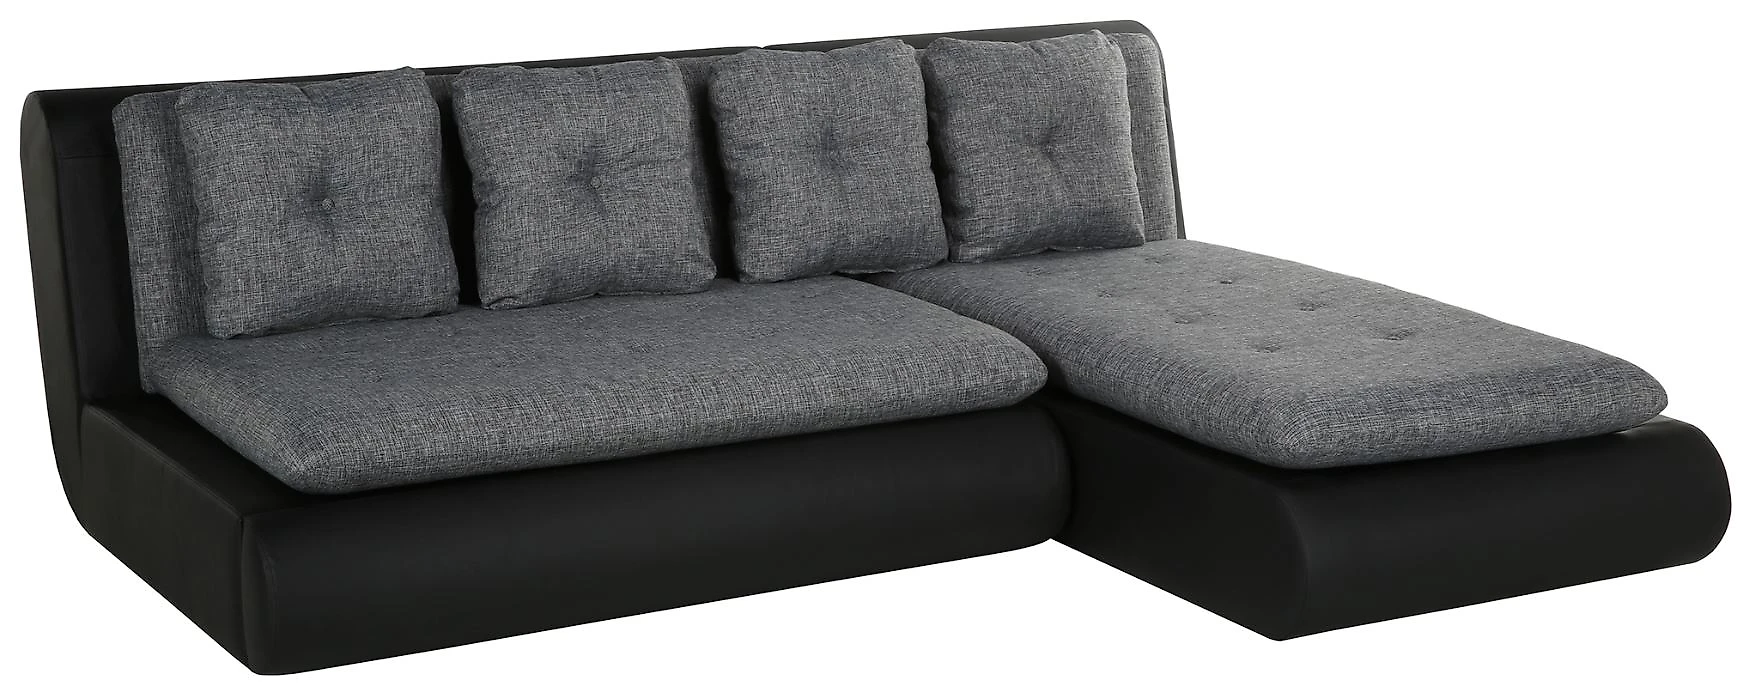  угловой диван из рогожки Кормак Мини Грей